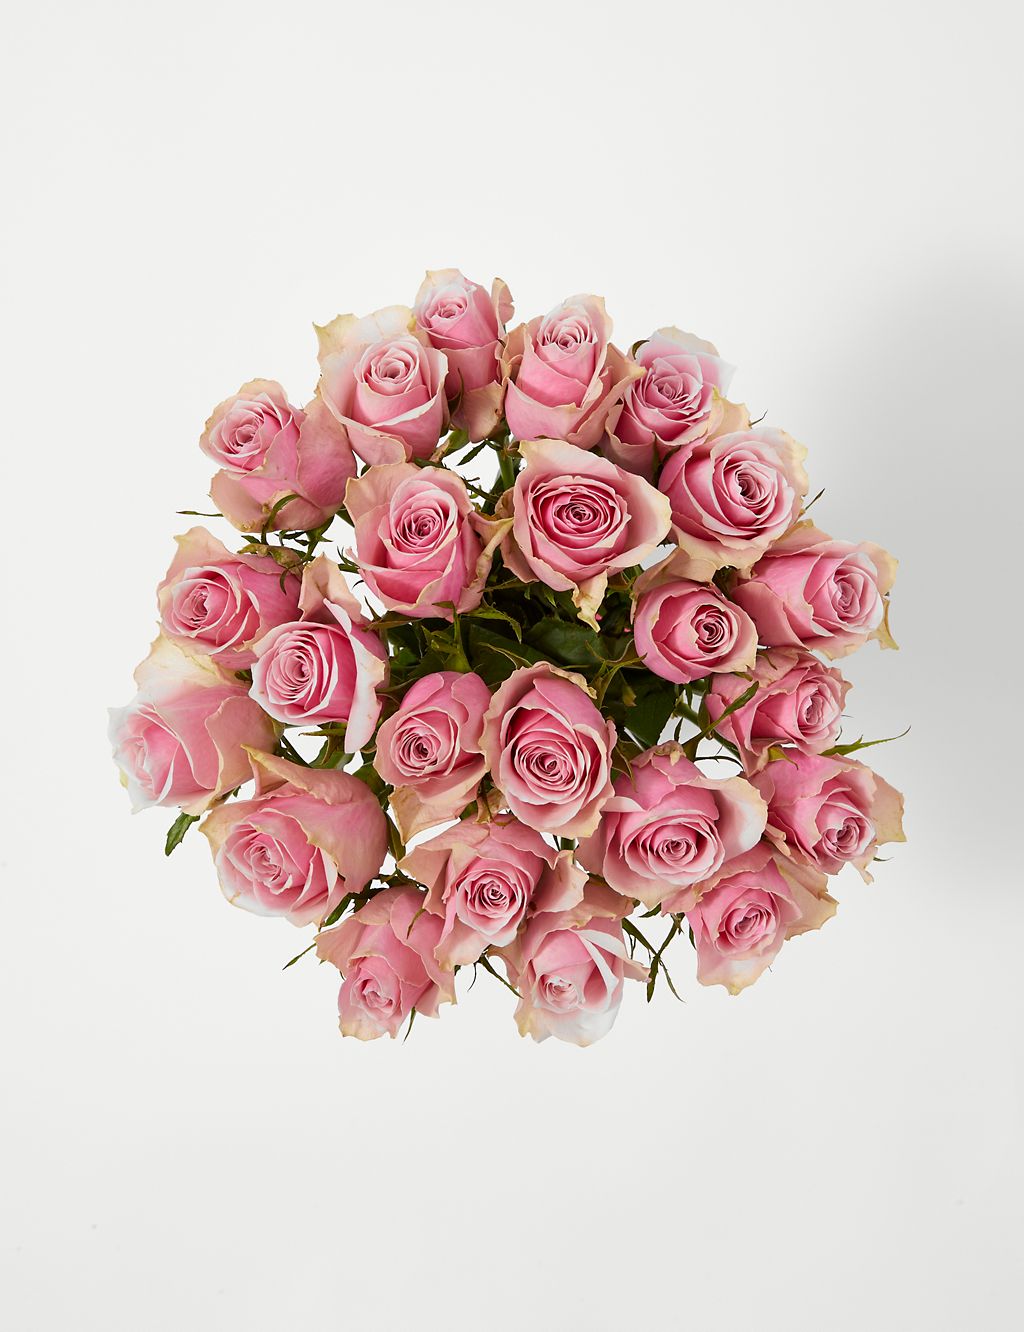 Blush Rose Abundance with Caramel Collection 1 of 6